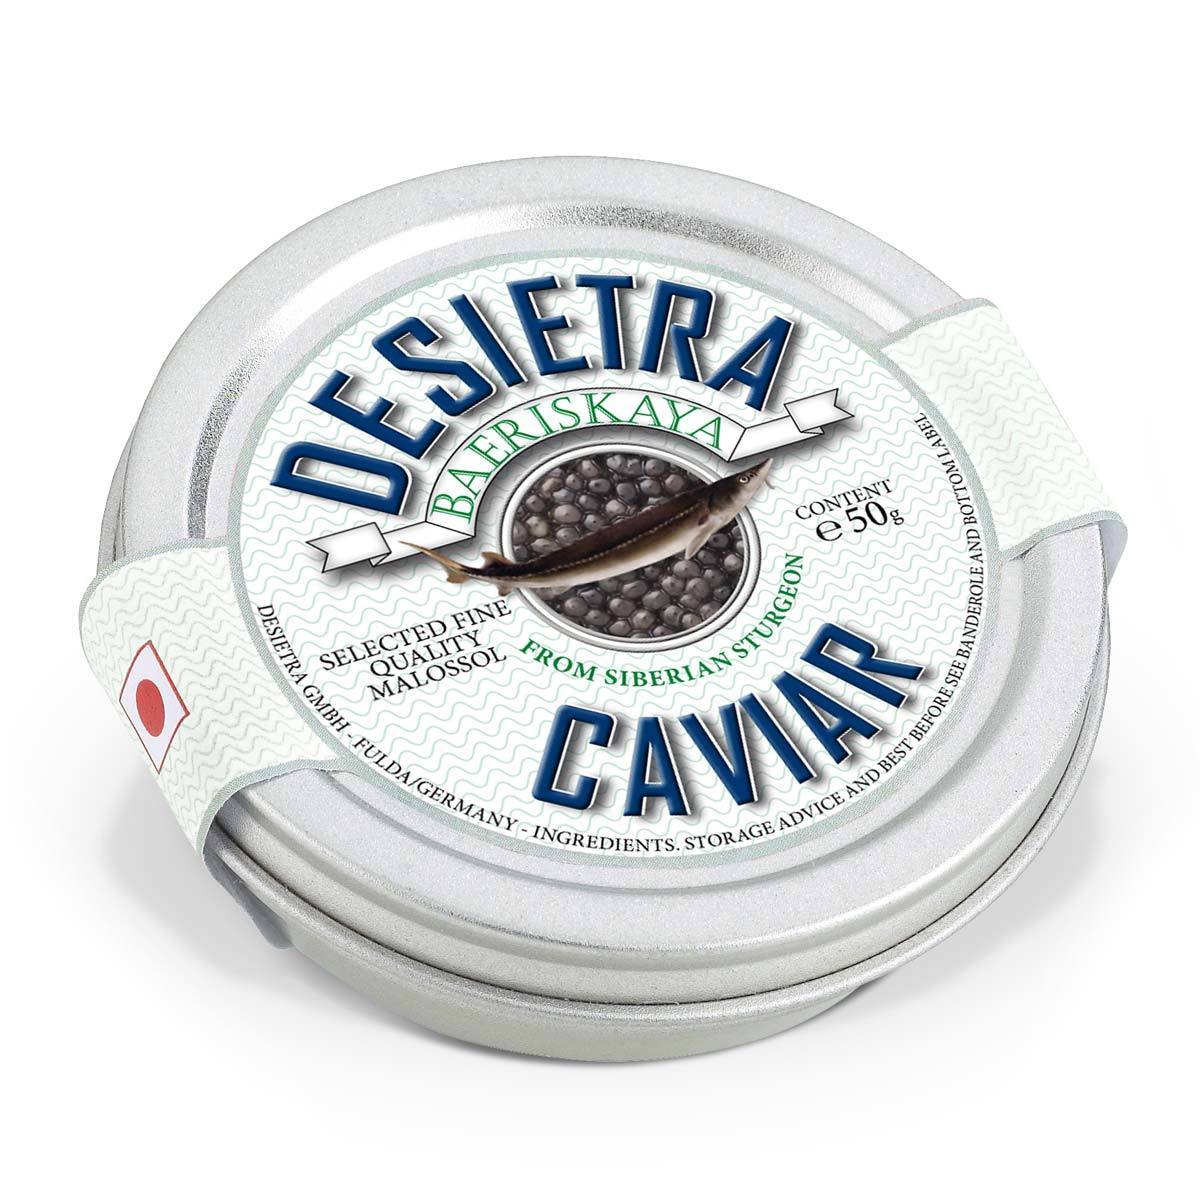 Desietra Acipenser Baeri Caviar from Siberian Sturgeon, 50g